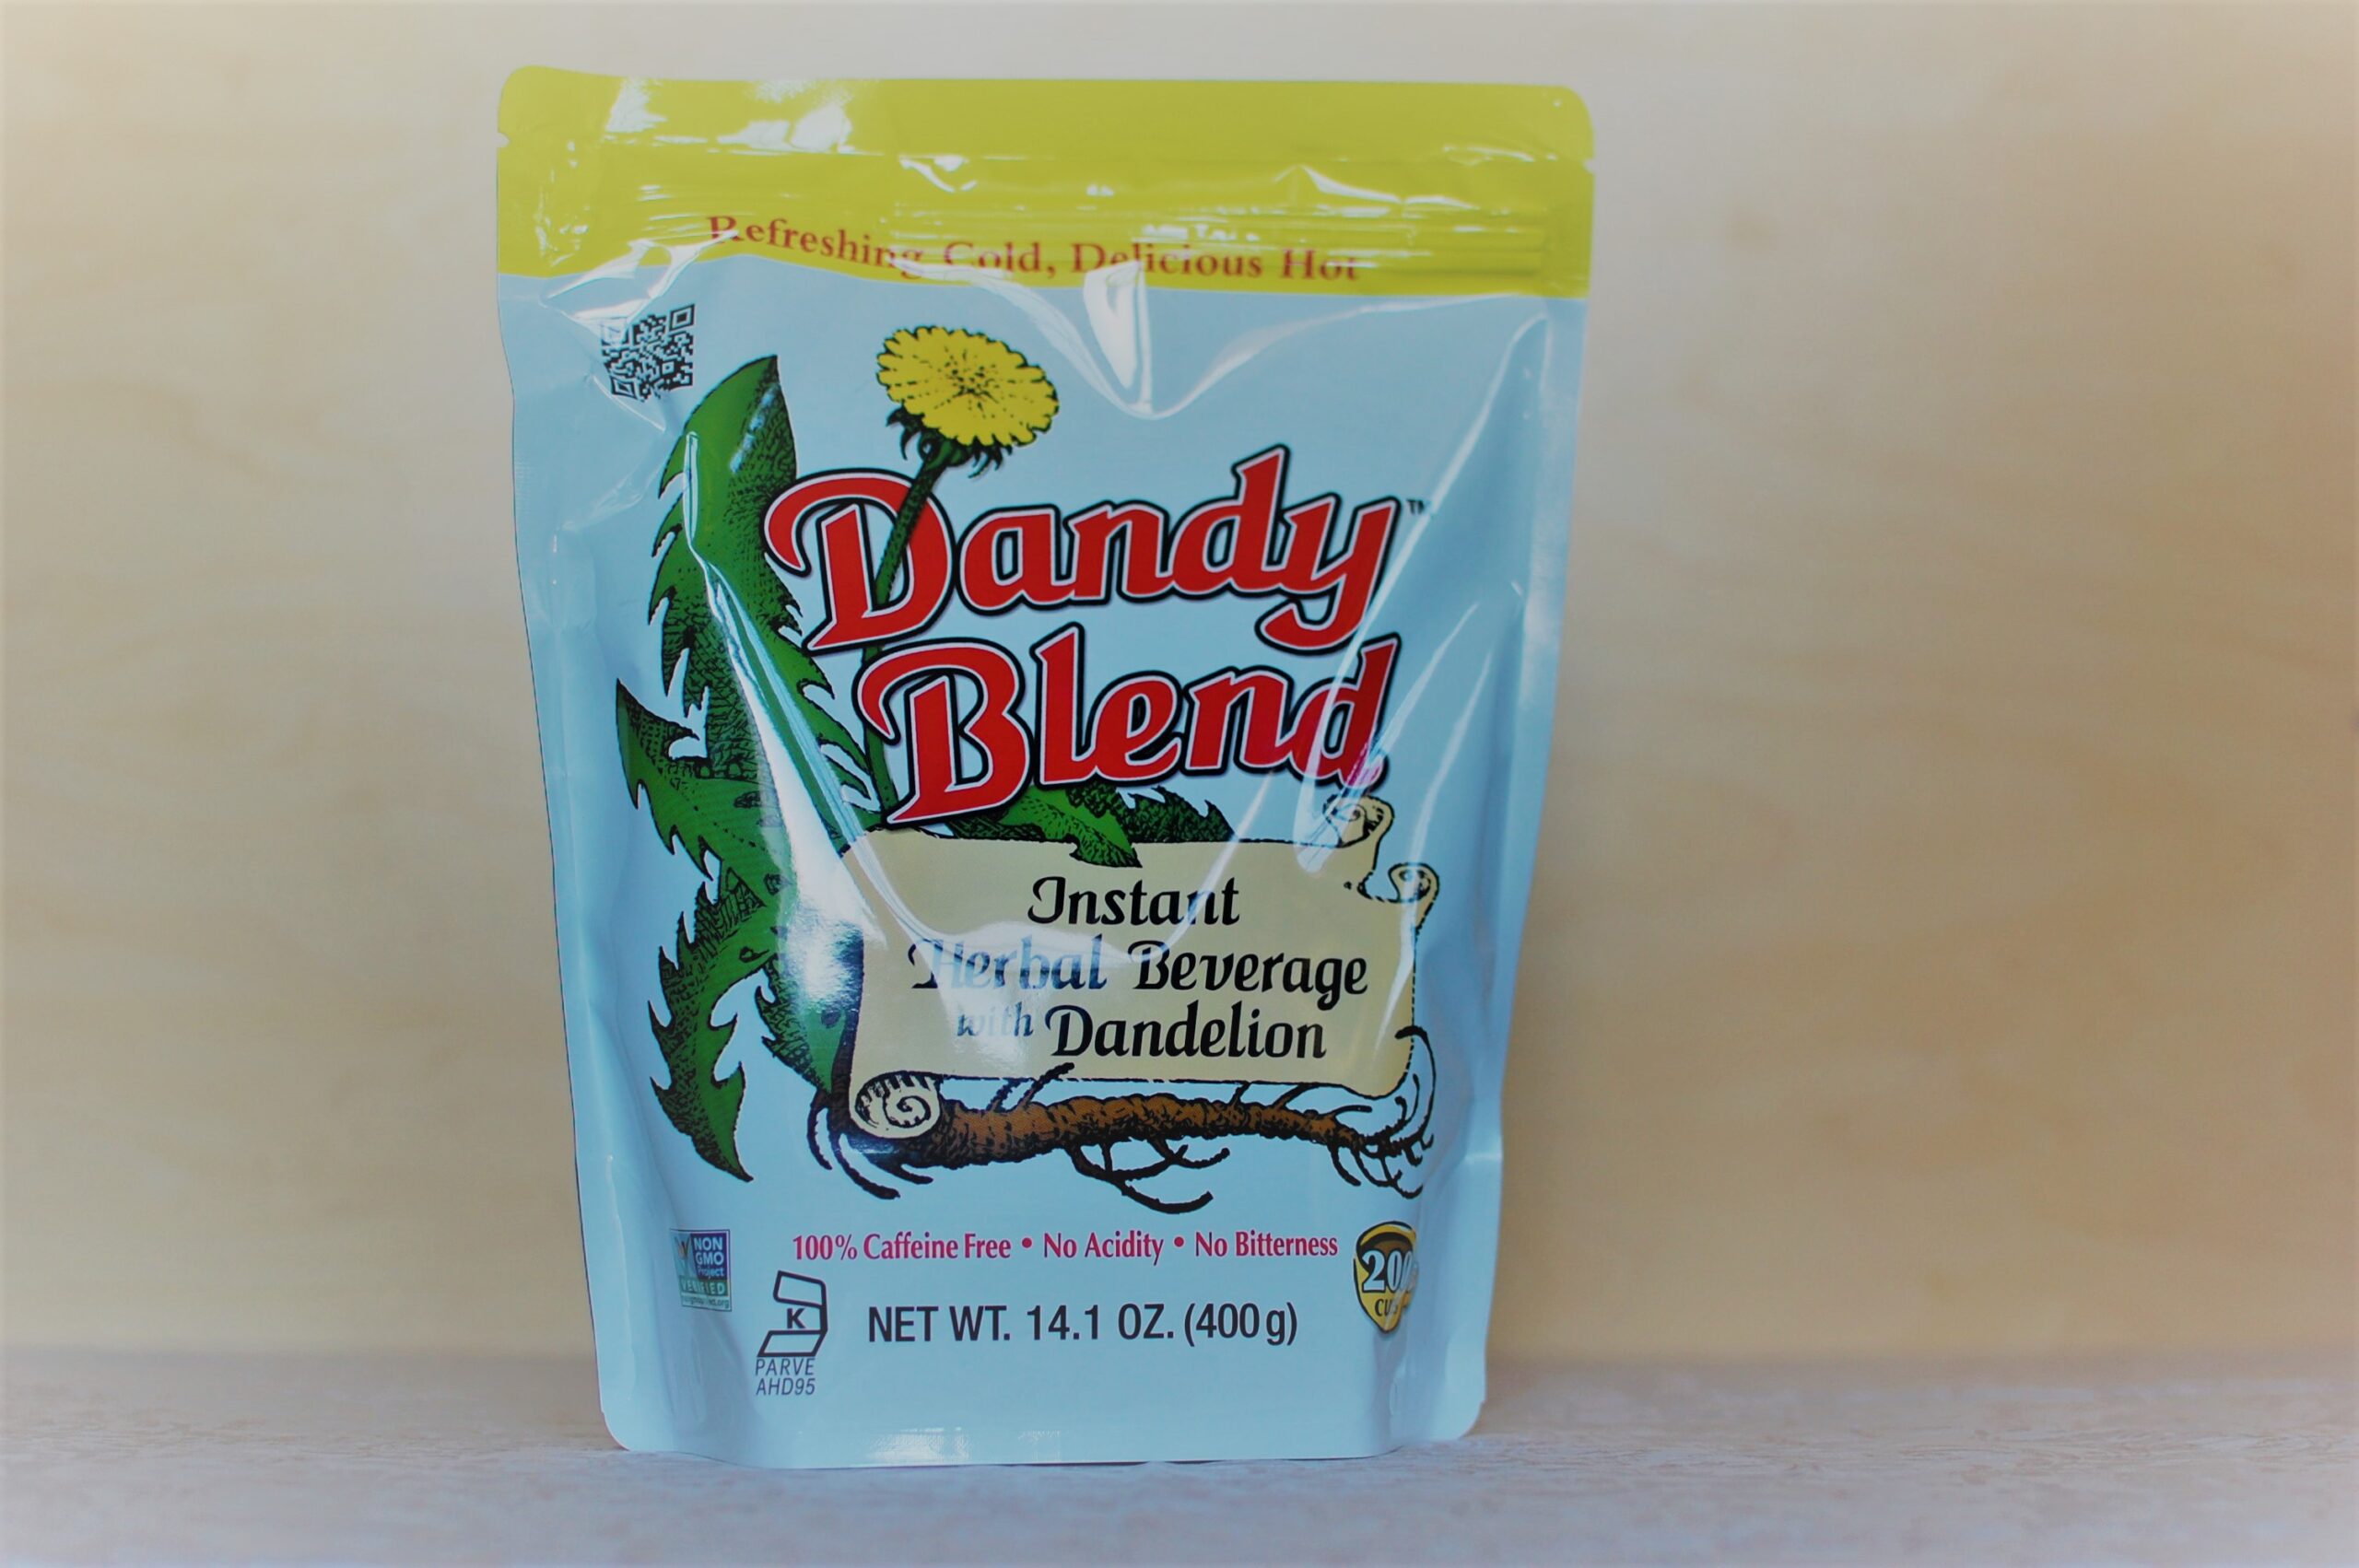 Dandy Blend, Instant Herbal Beverage with Dandelion, Caffeine Free